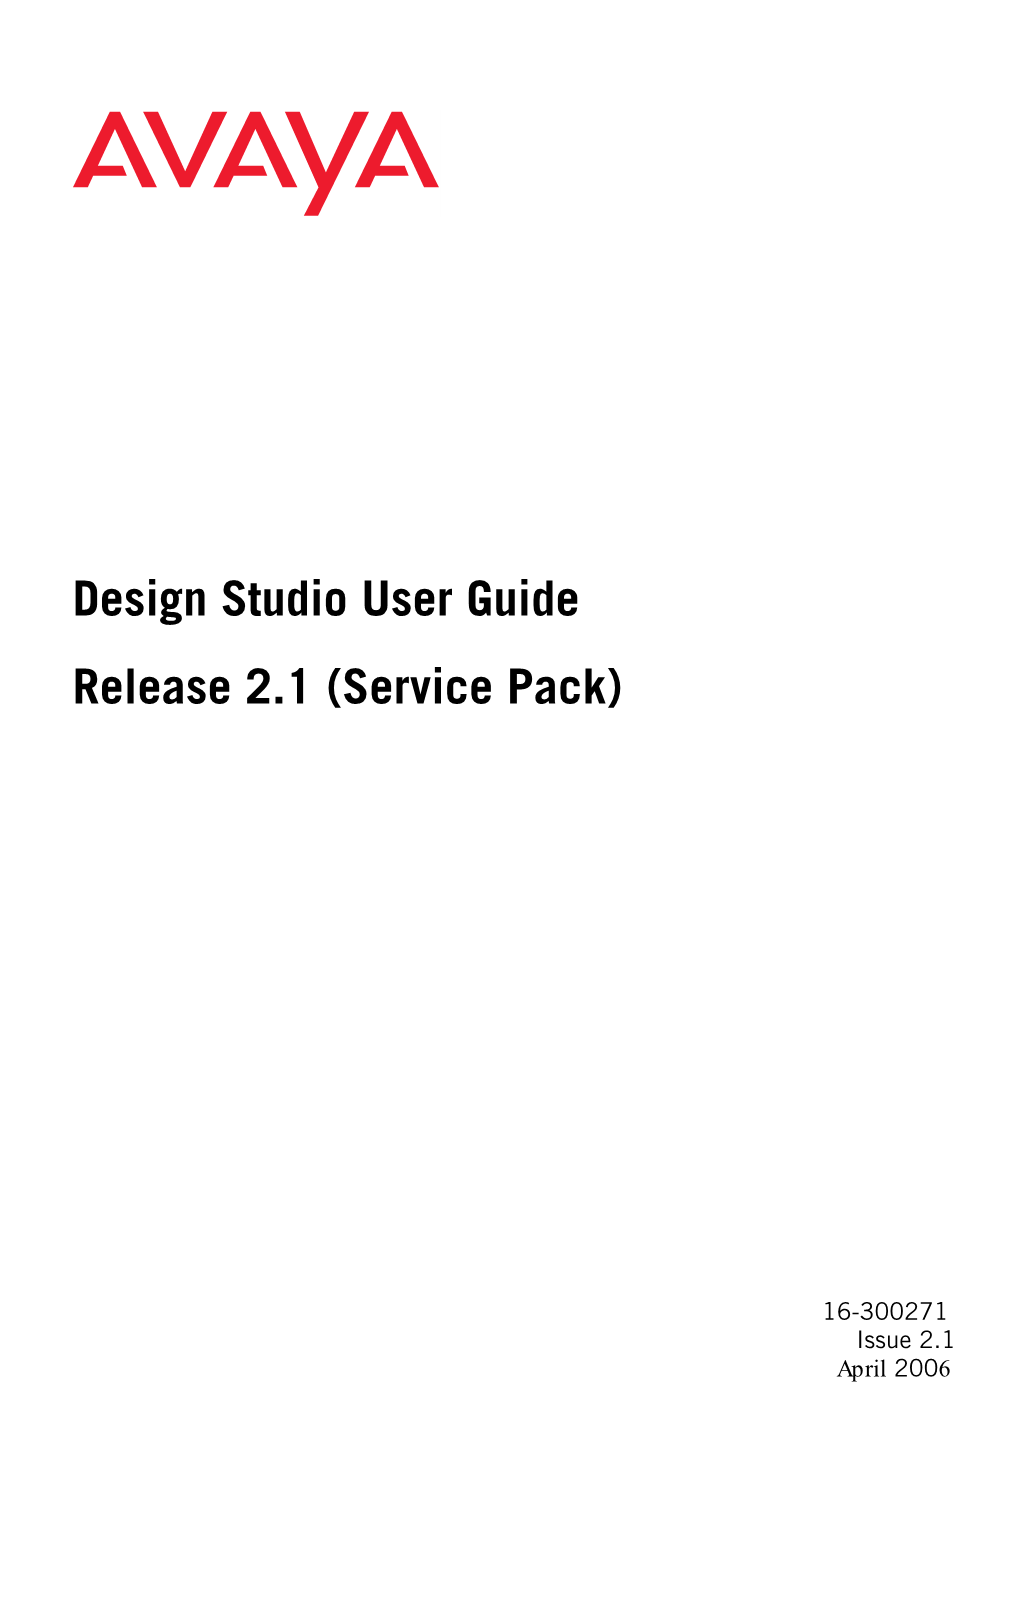 Design Studio User Guide Release 2.1 (Service Pack)